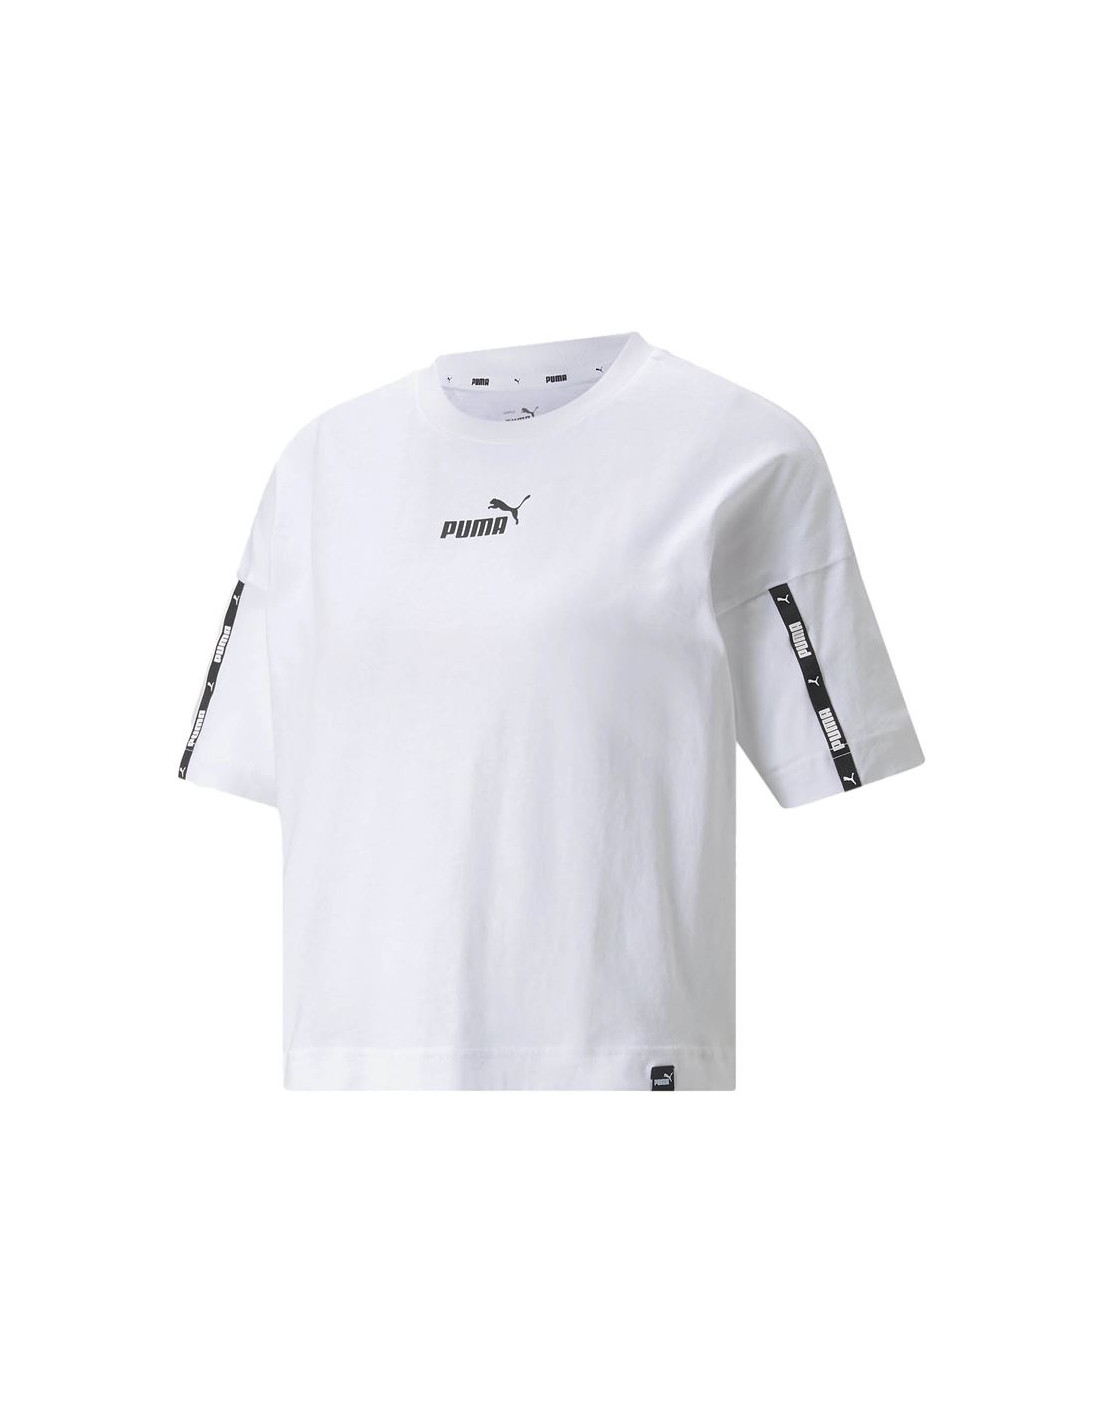 Camiseta puma power tape cropped w white